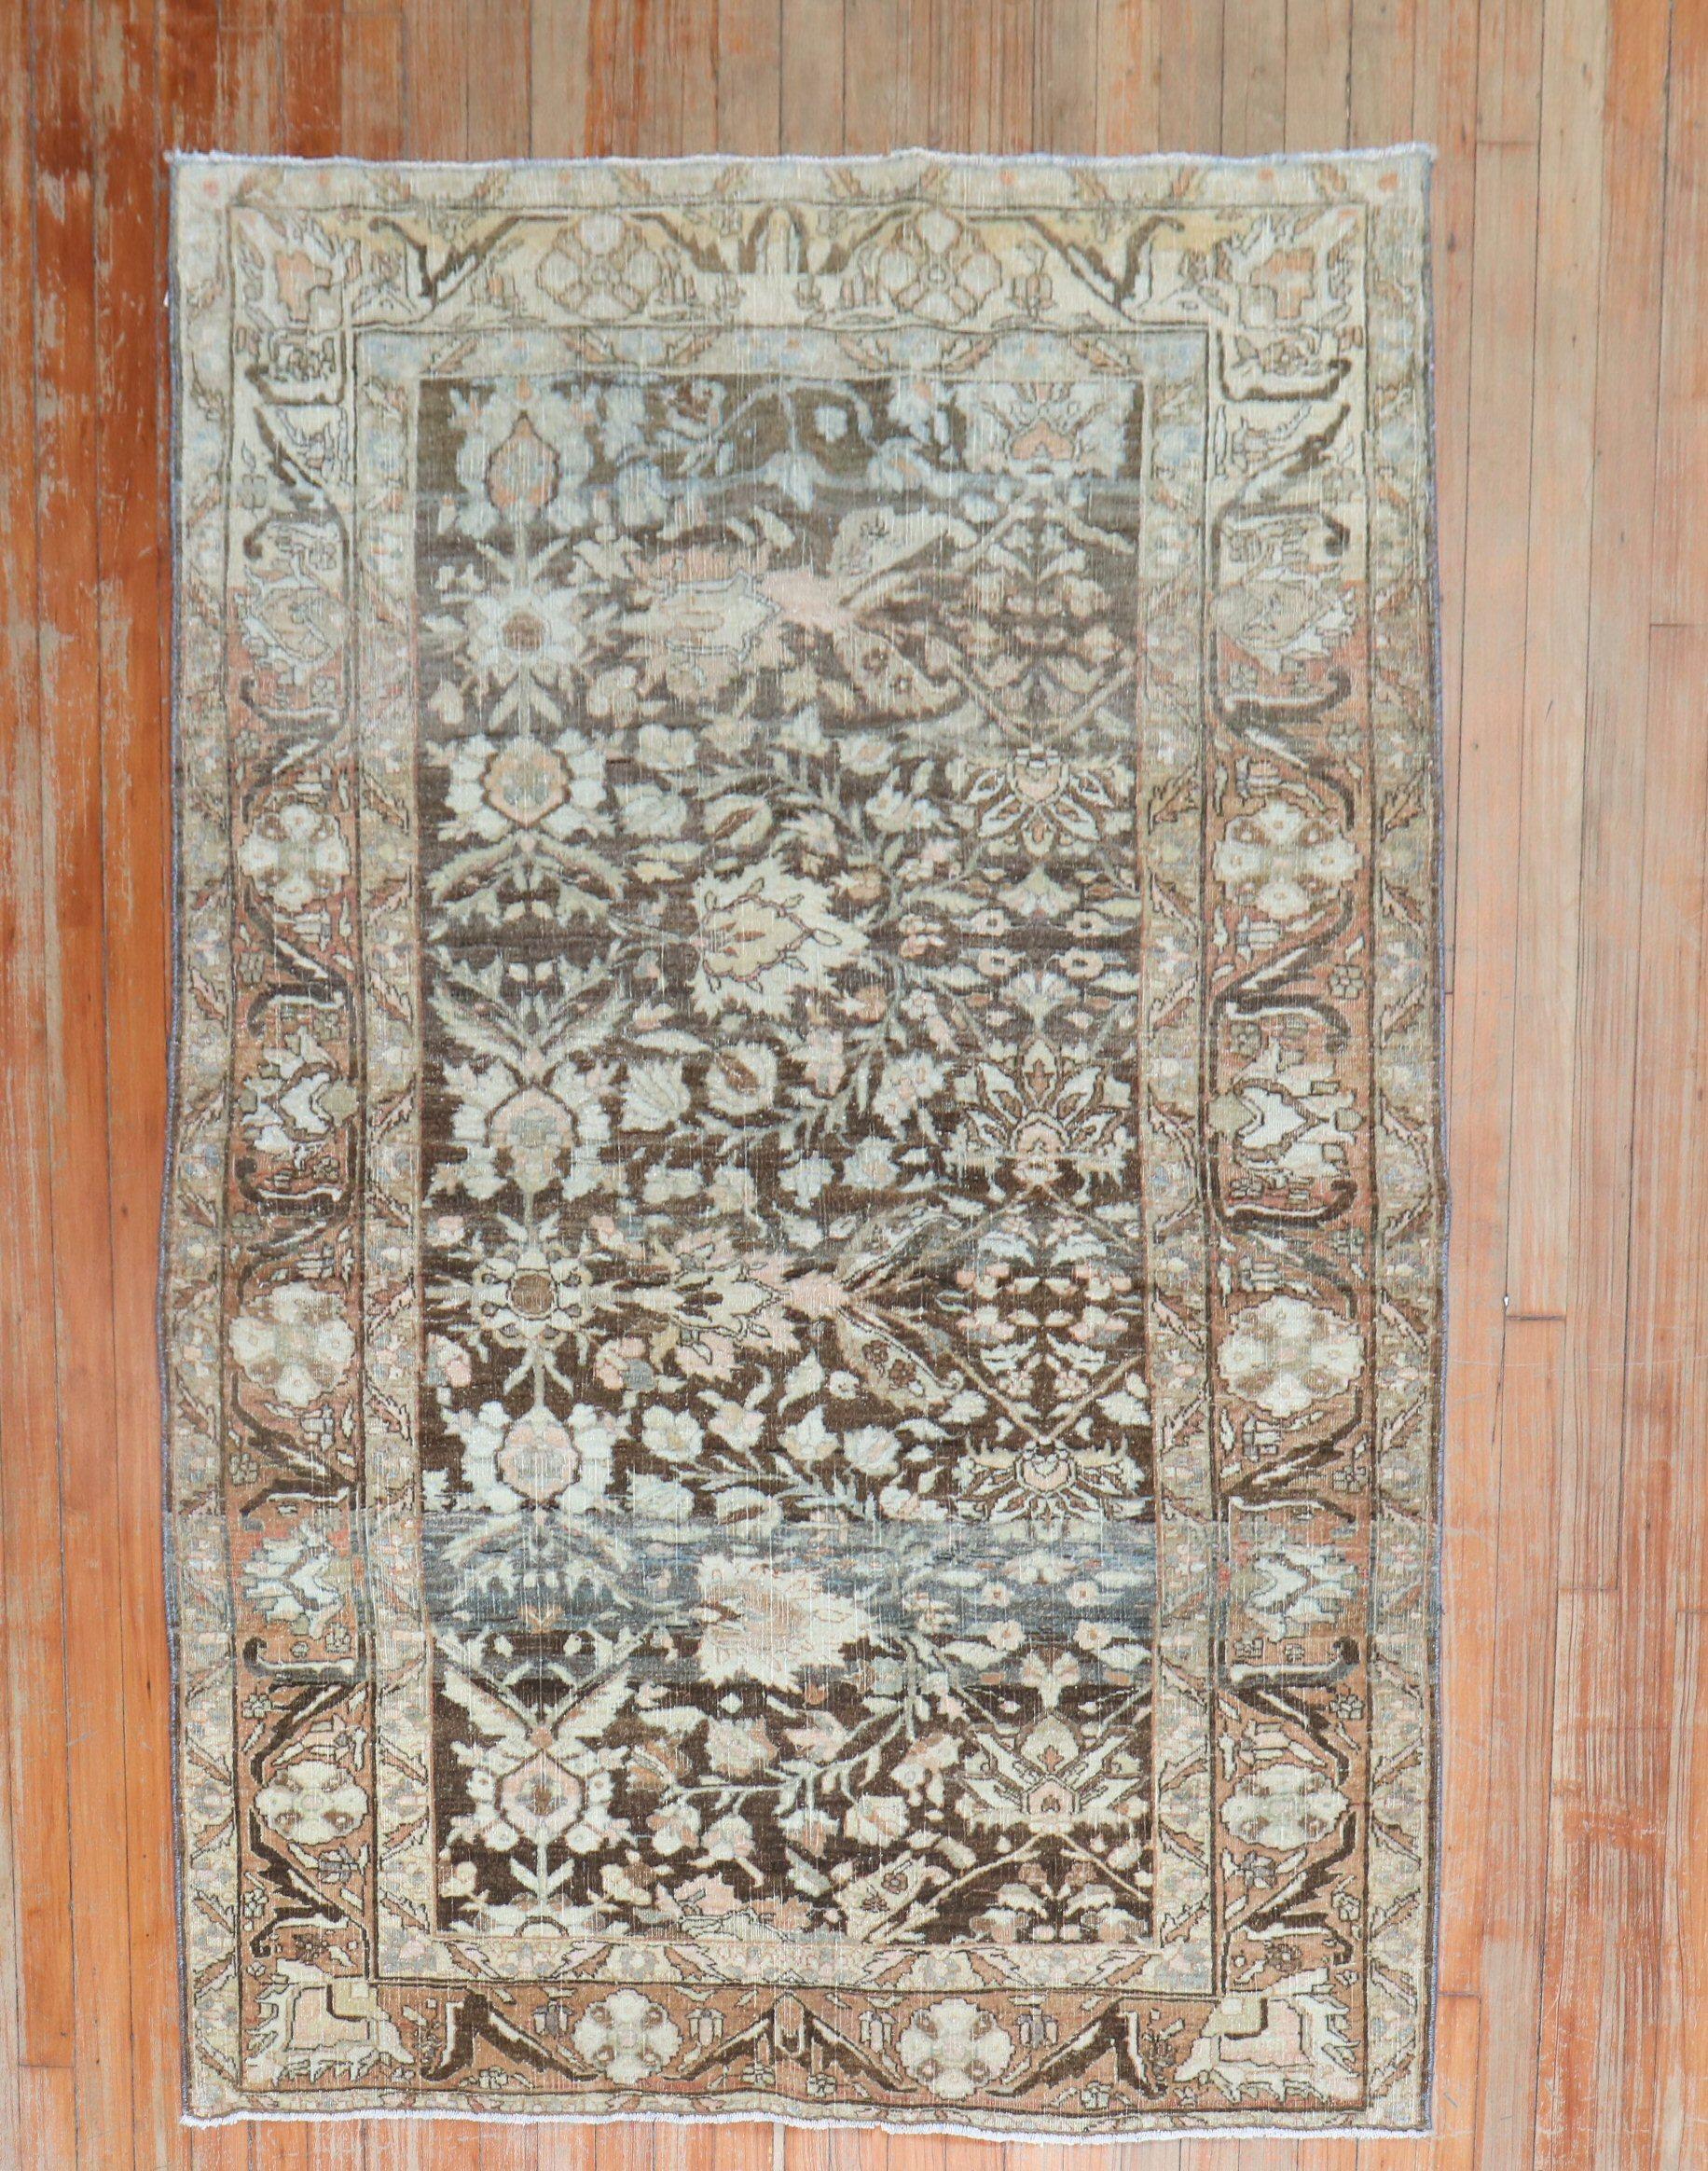 Early 20th-century Persian Square Bidjar rug in predominantly brown.

Measures: 3' 8'' x 5' 9''.

